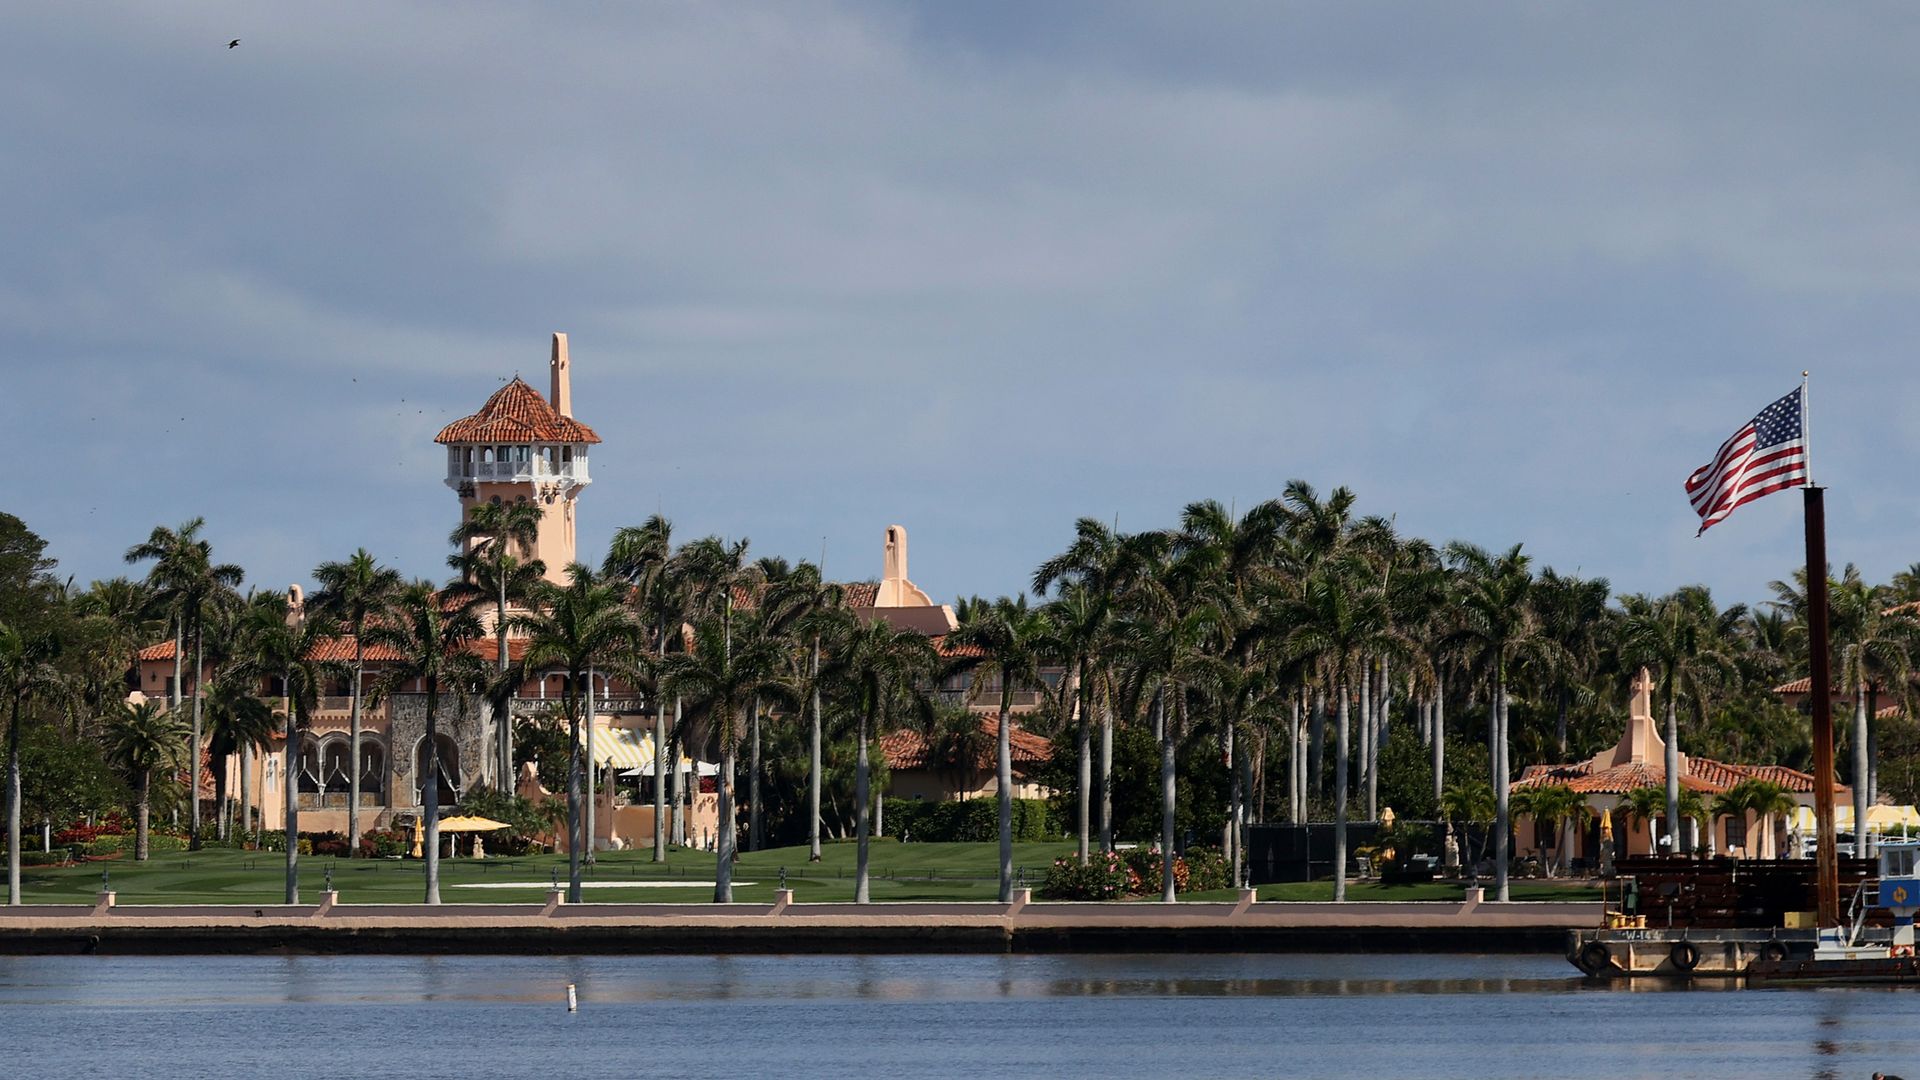  the Mar-a-Lago resort in Palm Beach, Florida, in February.